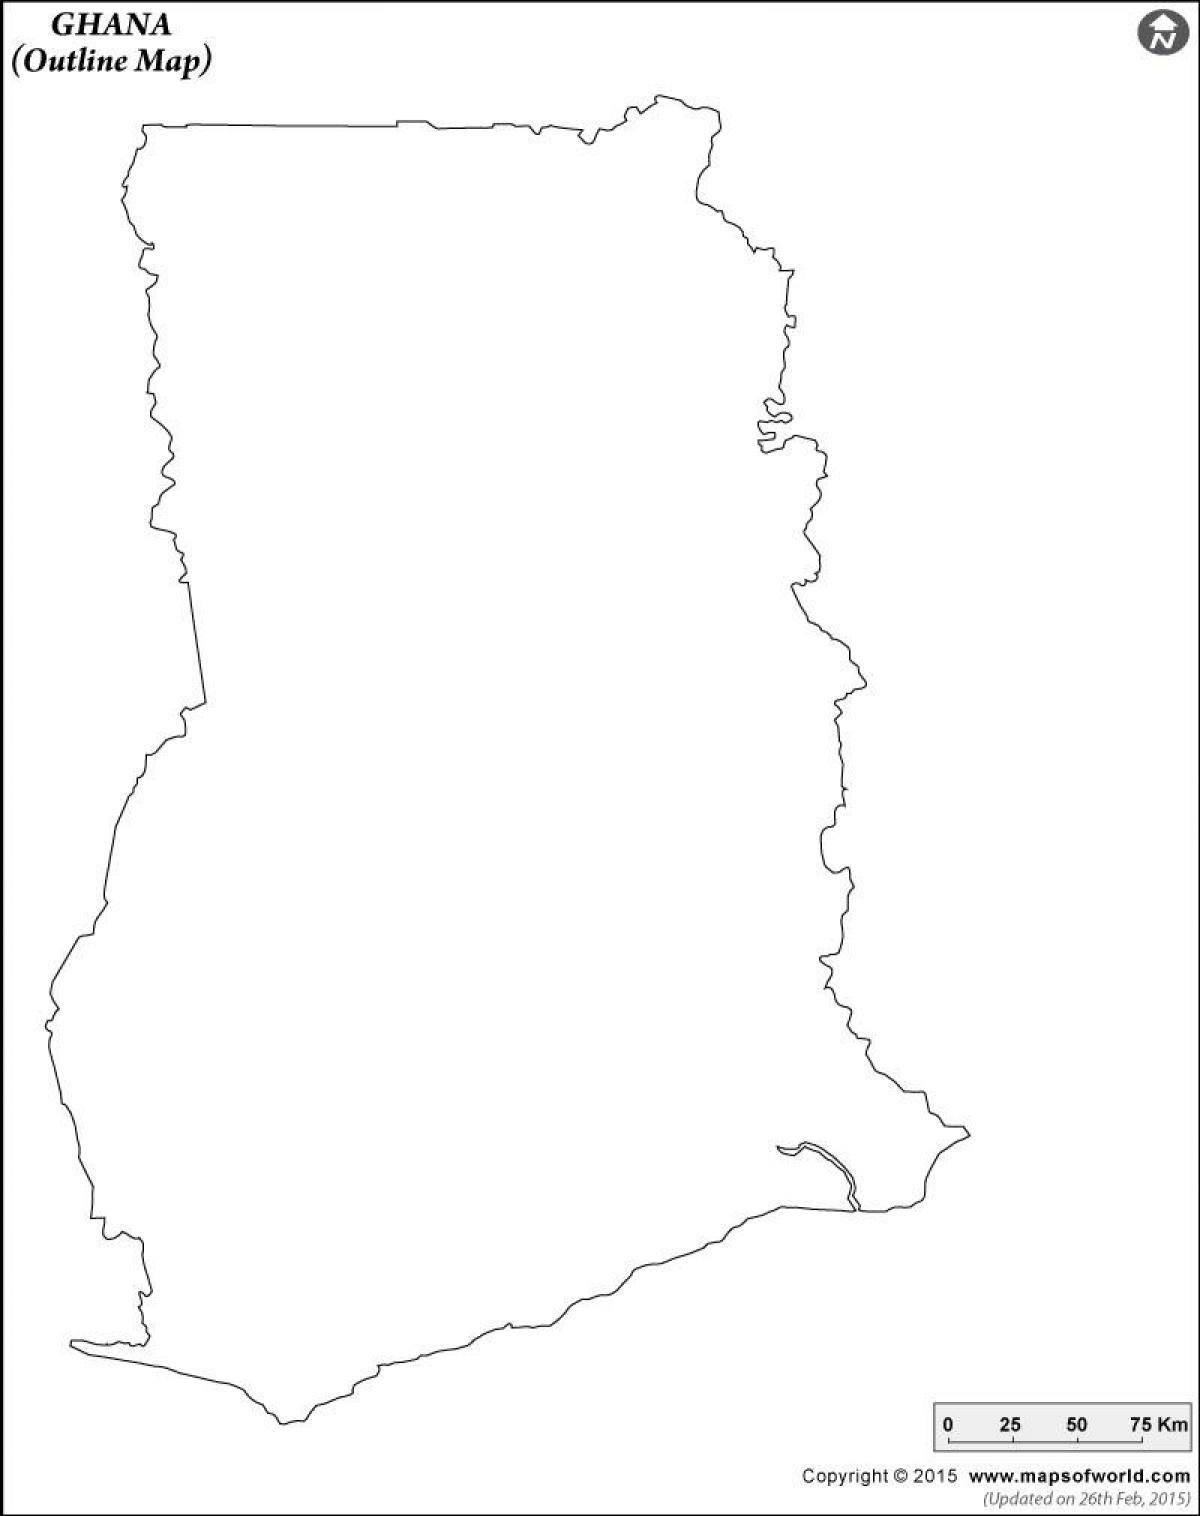 hartă goală din ghana